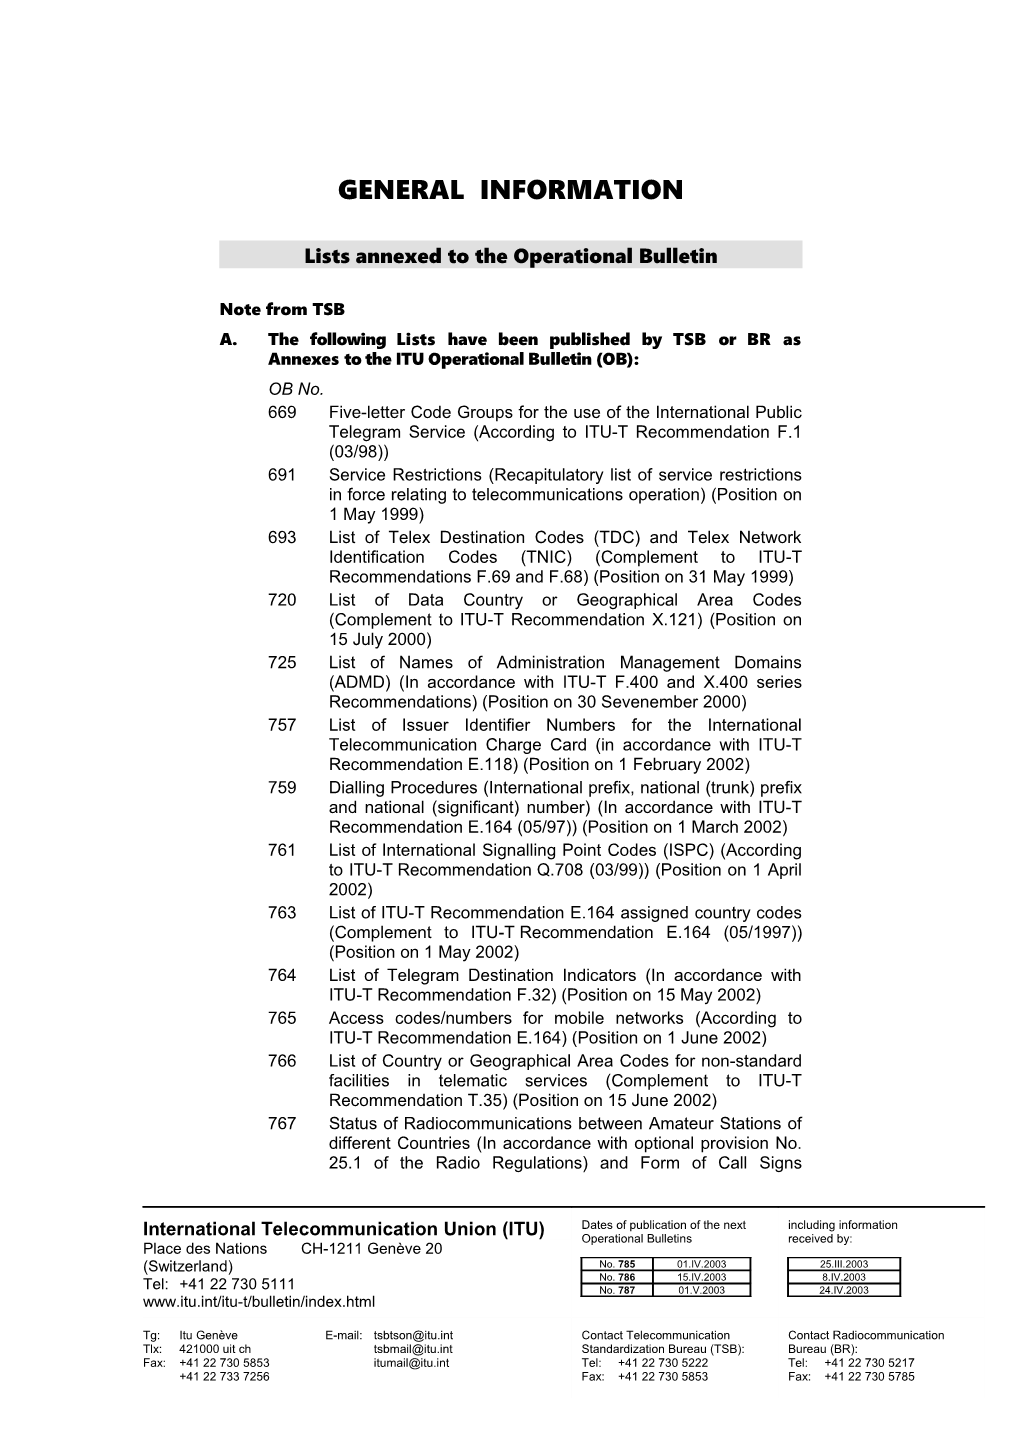 ITU Operational Bulletin No. 784 - 15.III.2003